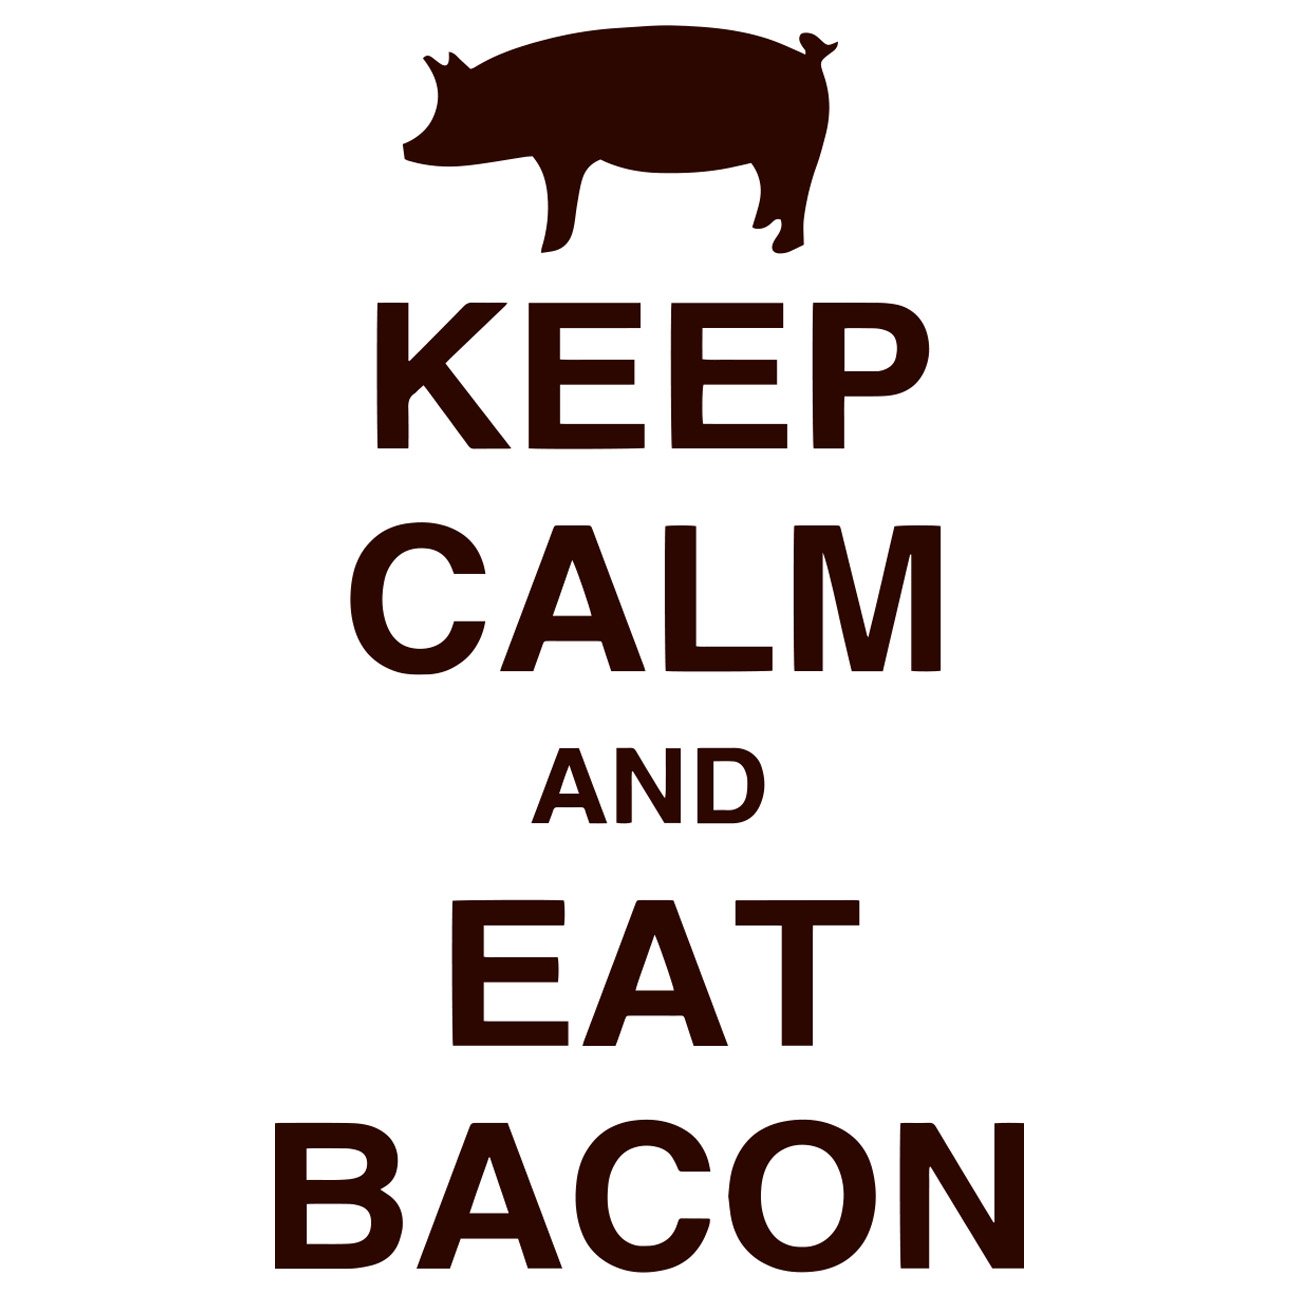 Keep calm and eat bacon